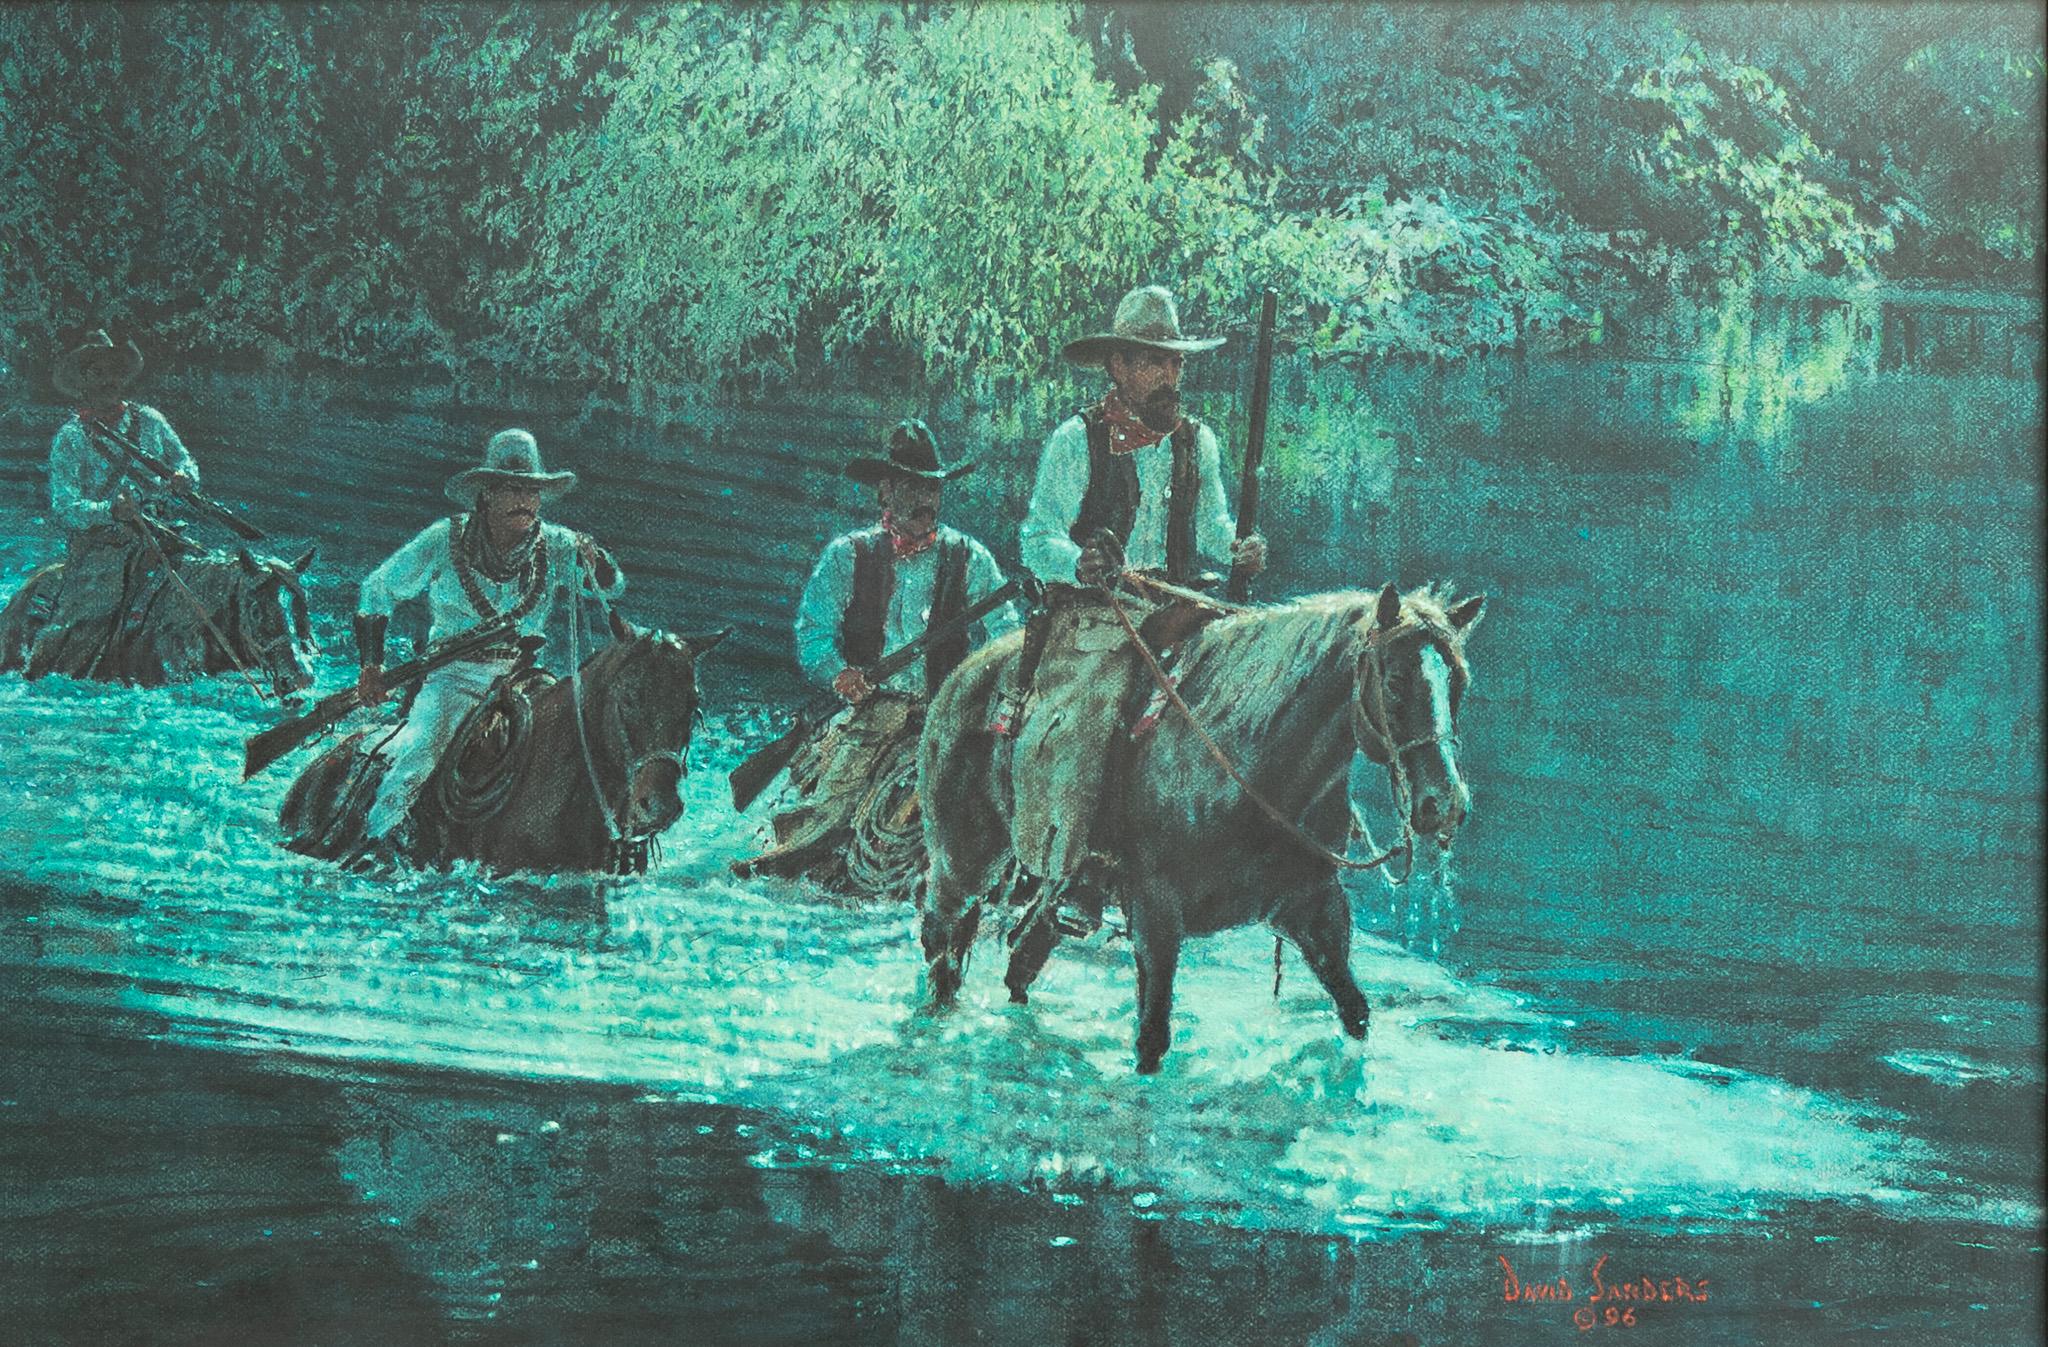 David Sanders Figurative Painting - "Night Crossing" Cowboy Pastel Painting Green Twilight Creek Horses Western